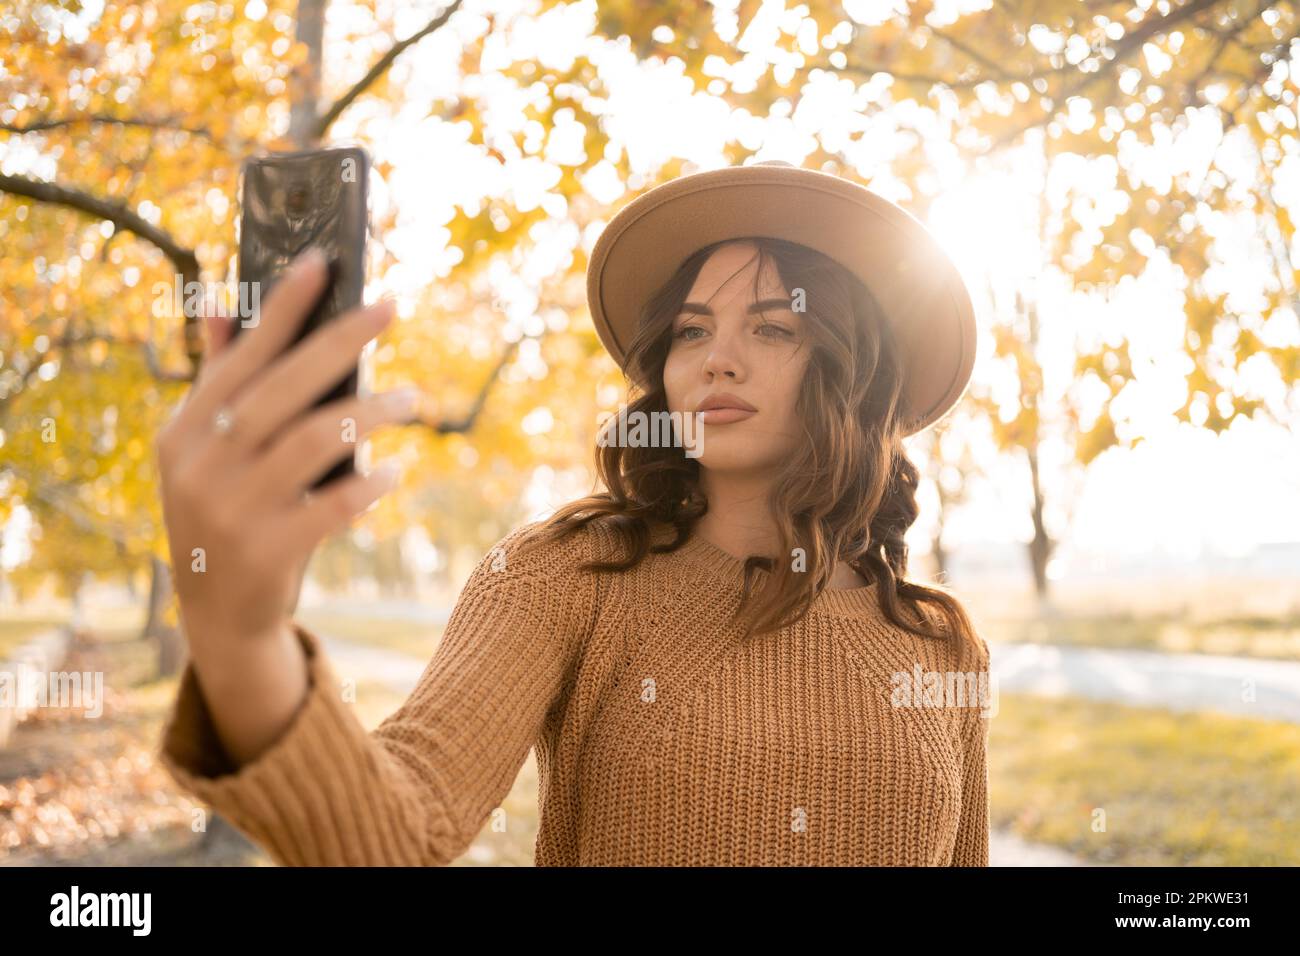 Beautiful dreamy lady make selfies wearing hat walking in autumn park, enjoying warm day. Copy space Stock Photo